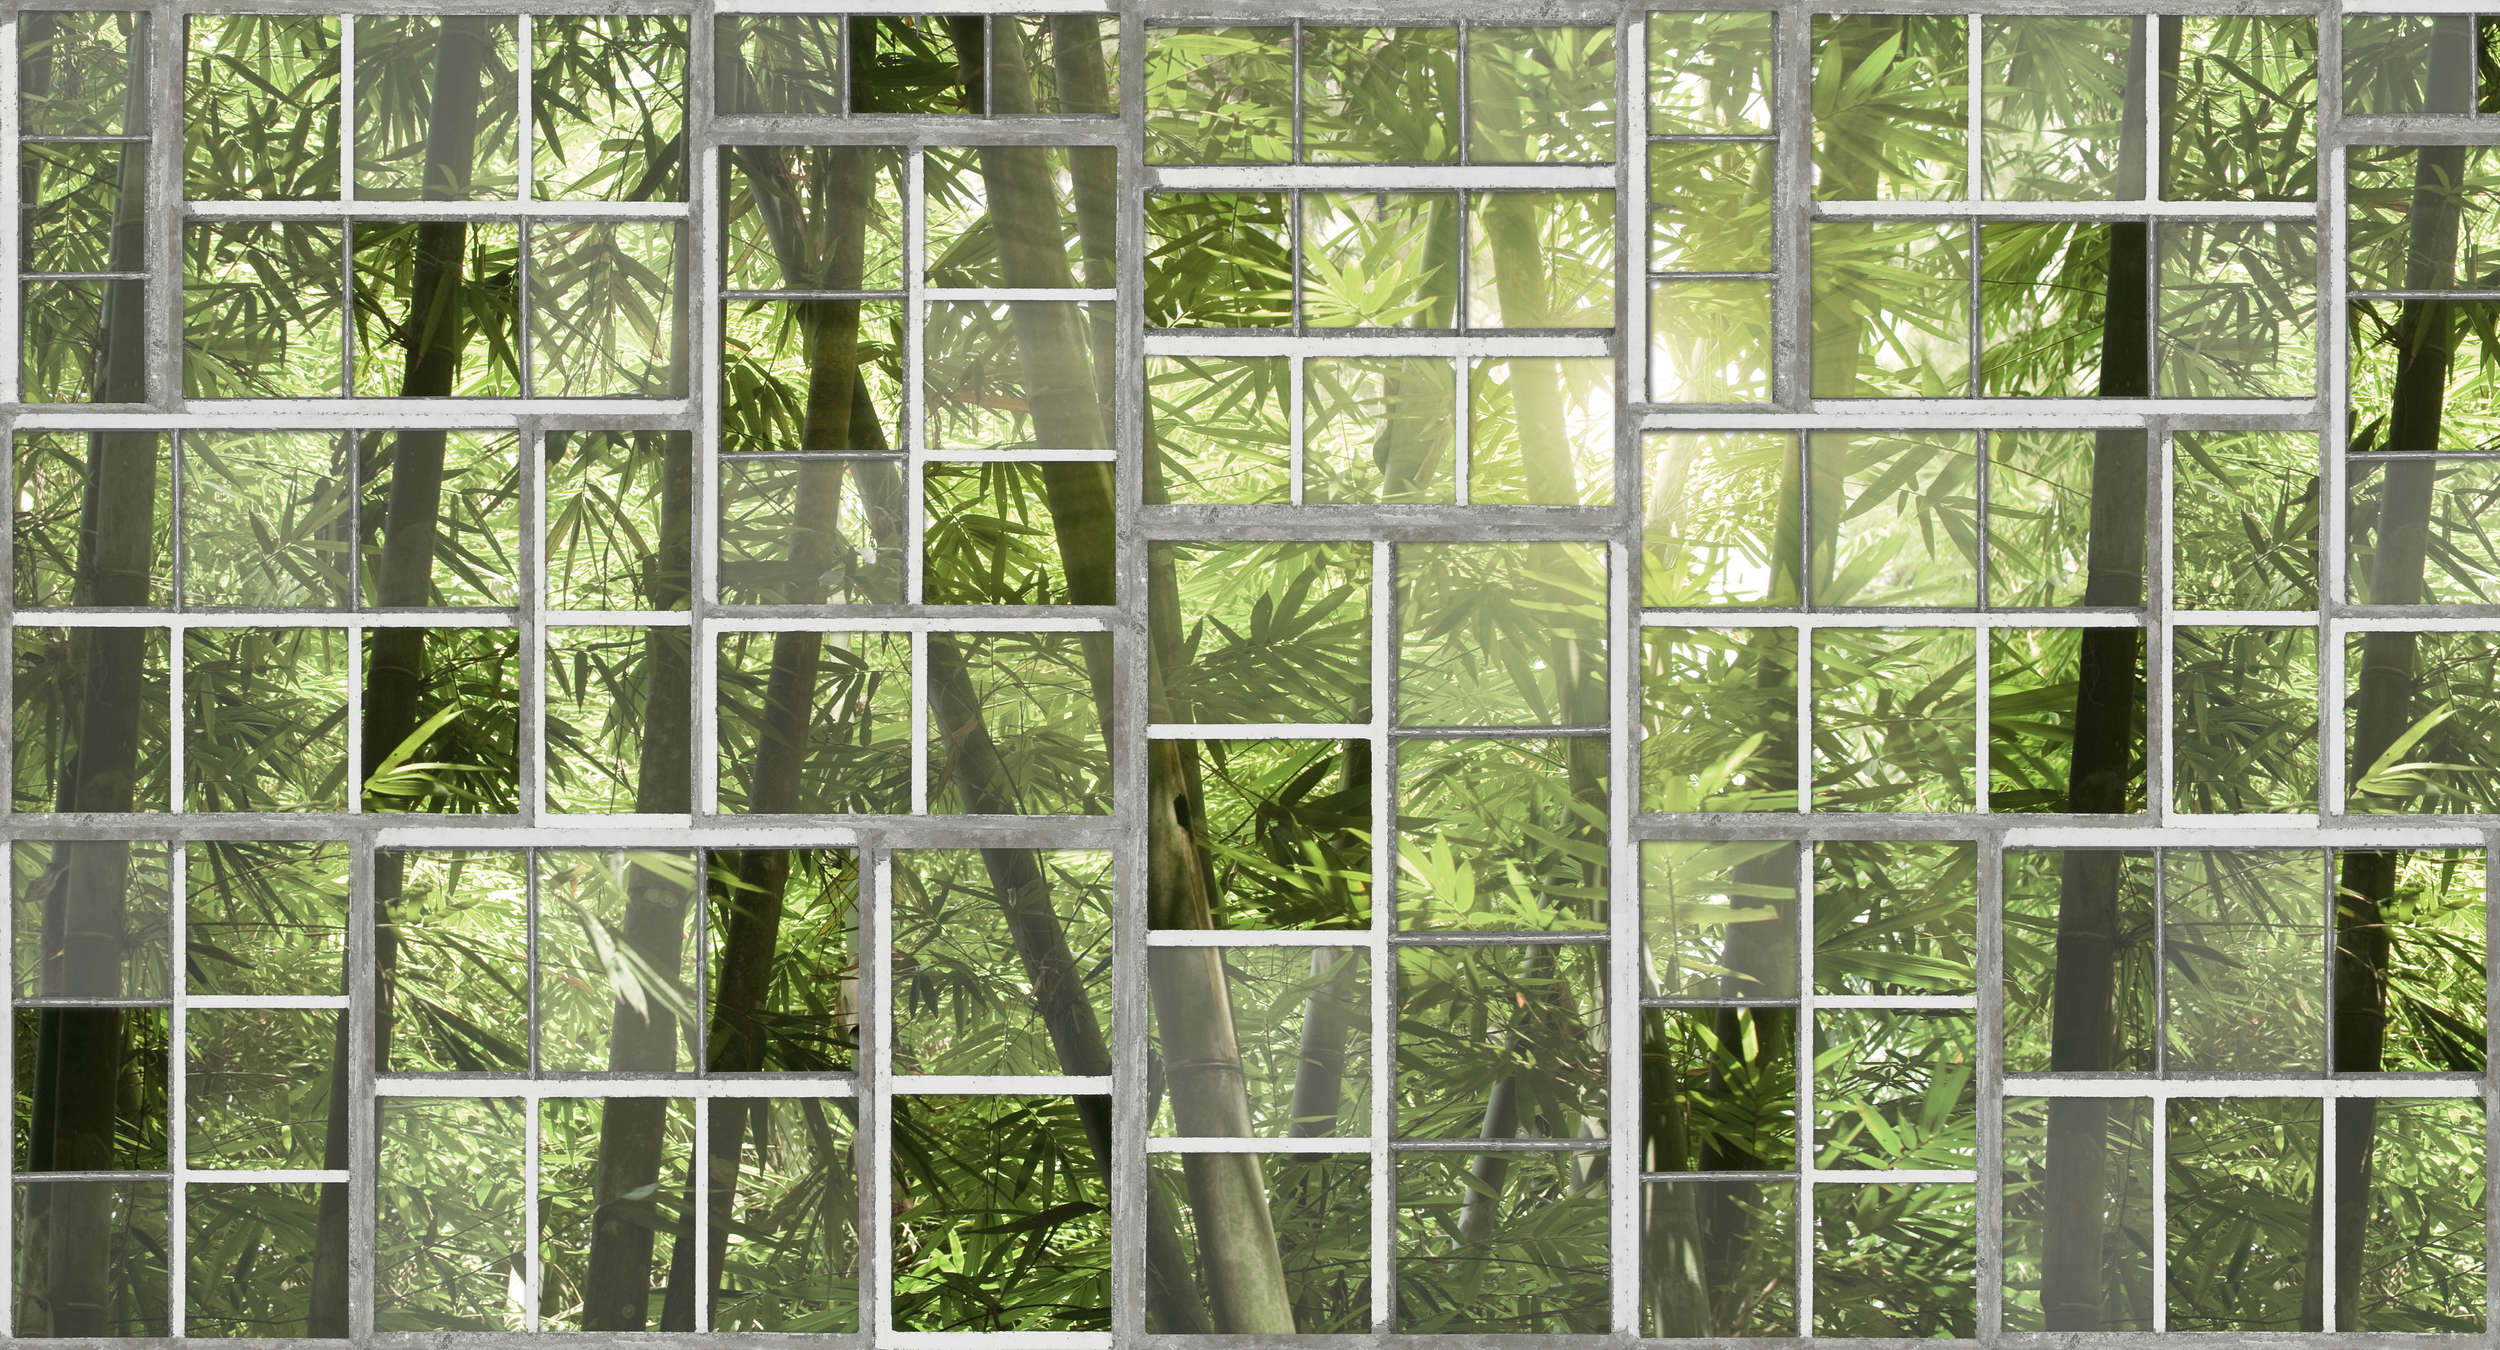             Fotomurali Finestra con vista sulla giungla, look retrò - Verde, grigio, bianco
        